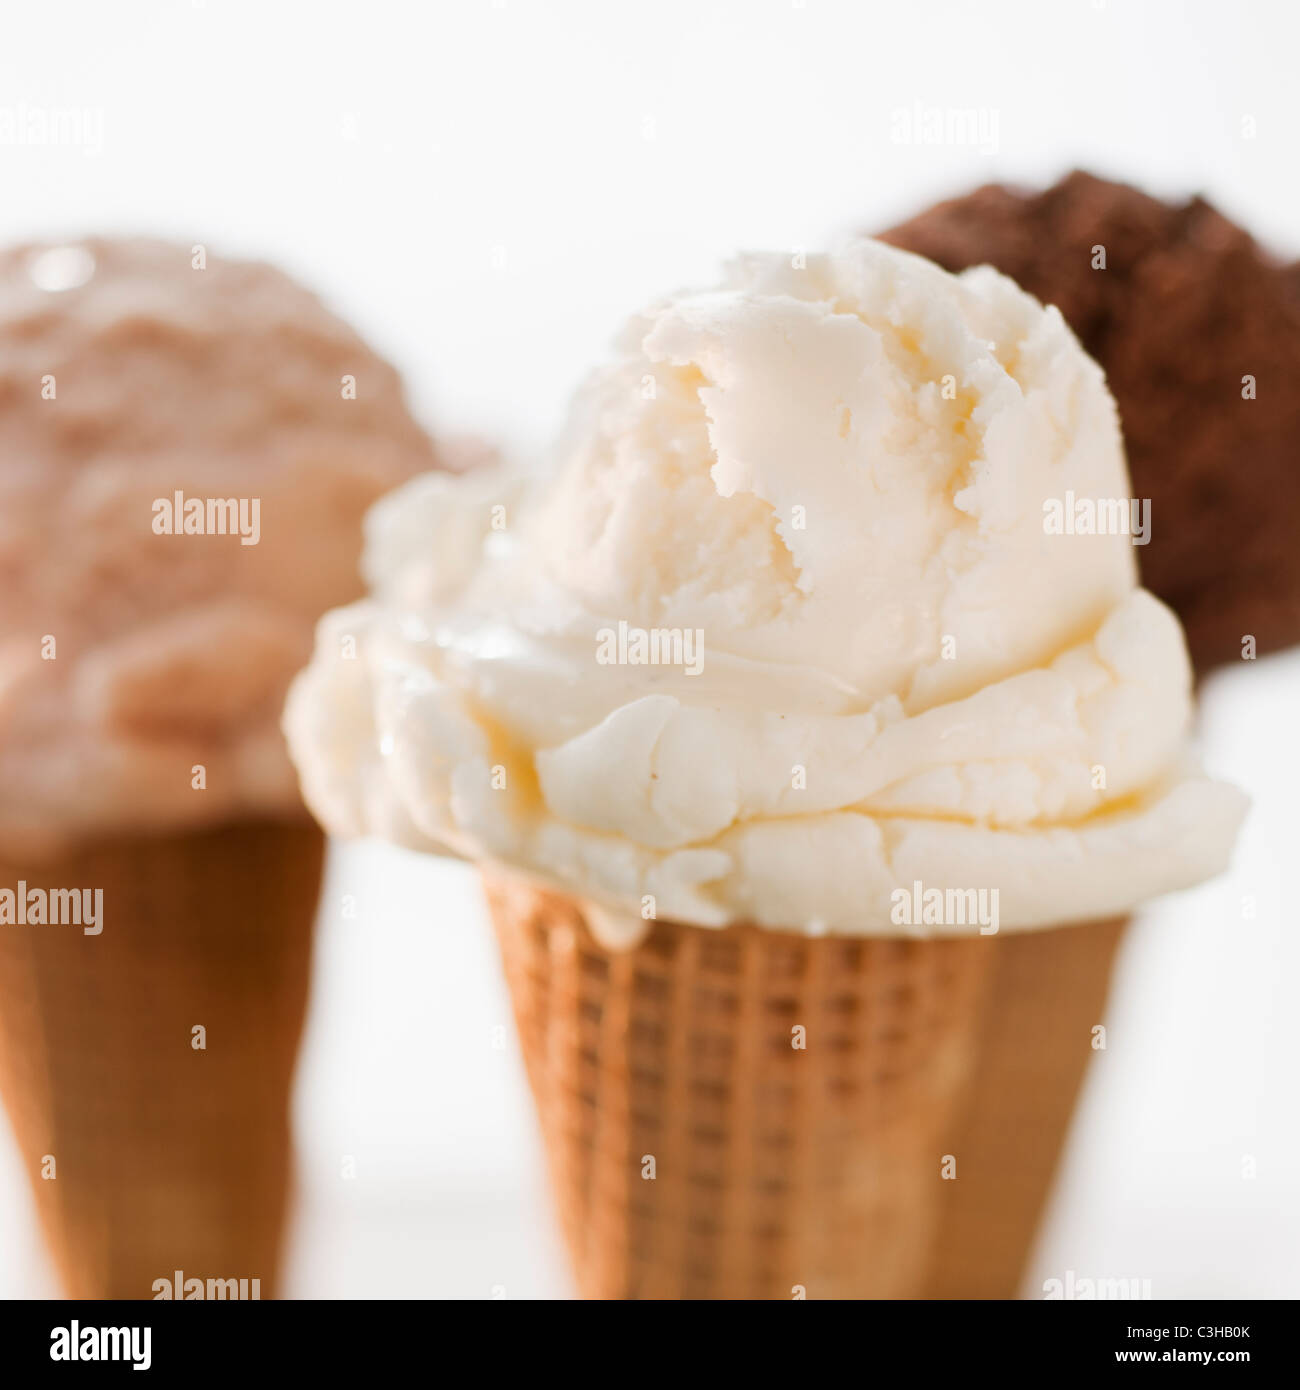 Close up of various ice cream cones Stock Photo